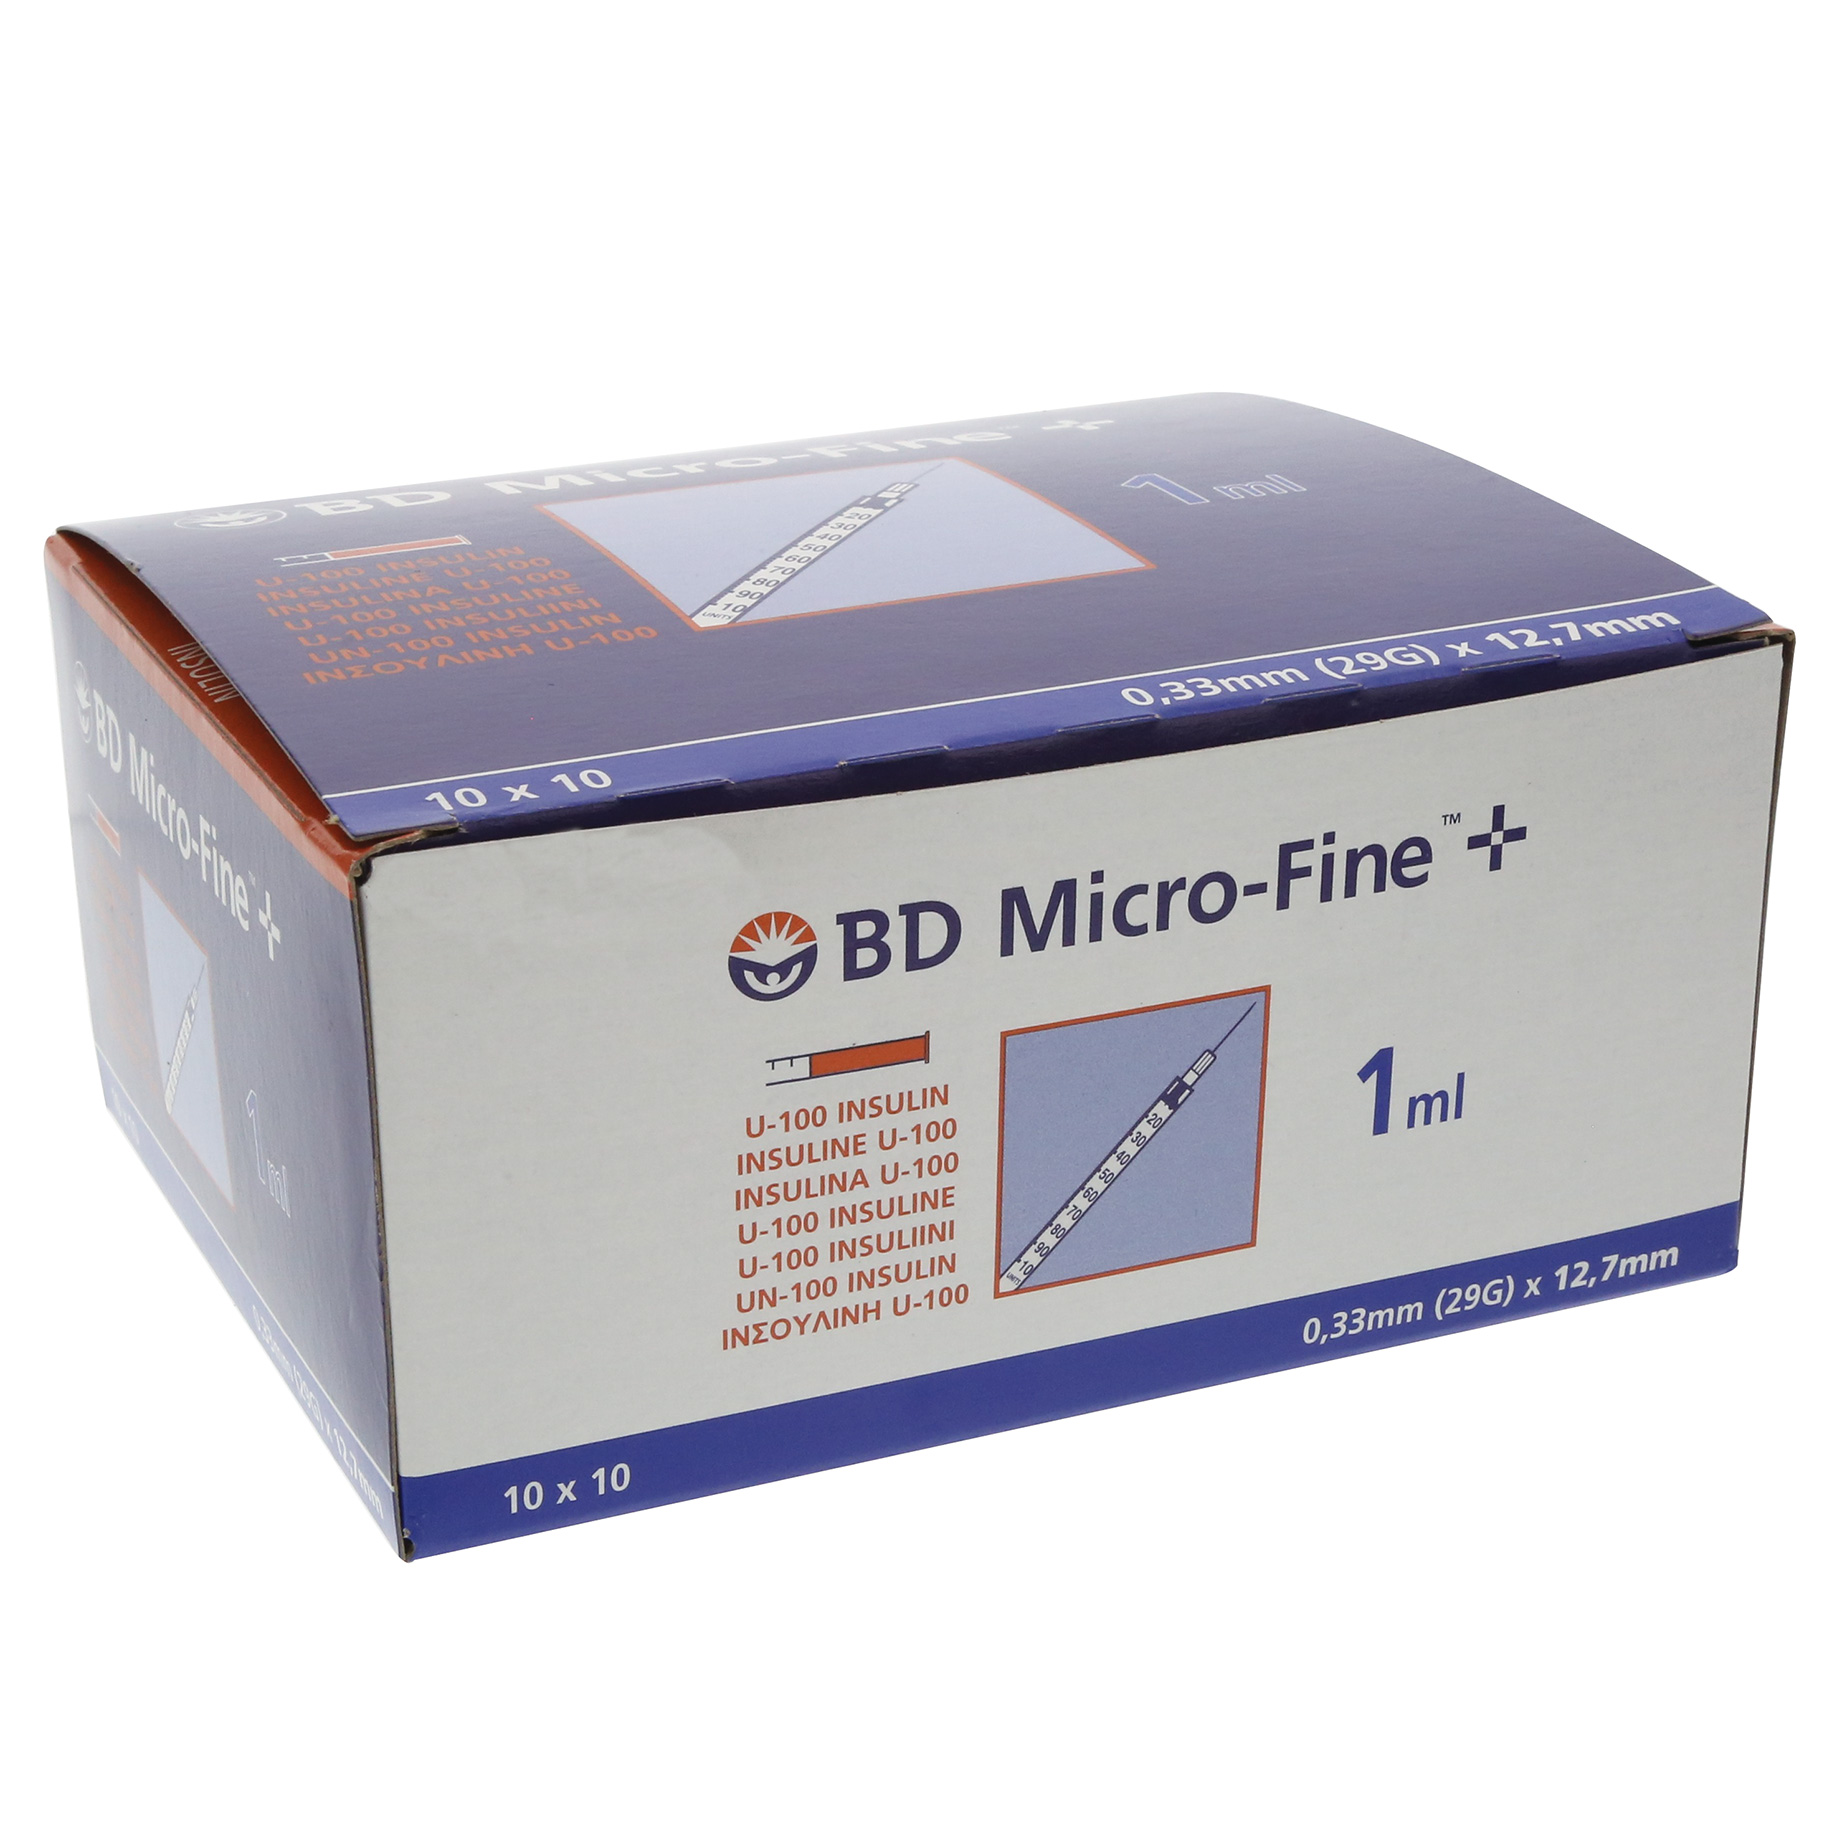 Insulin Syringe Microfine 1ml 29G 12.7mm 